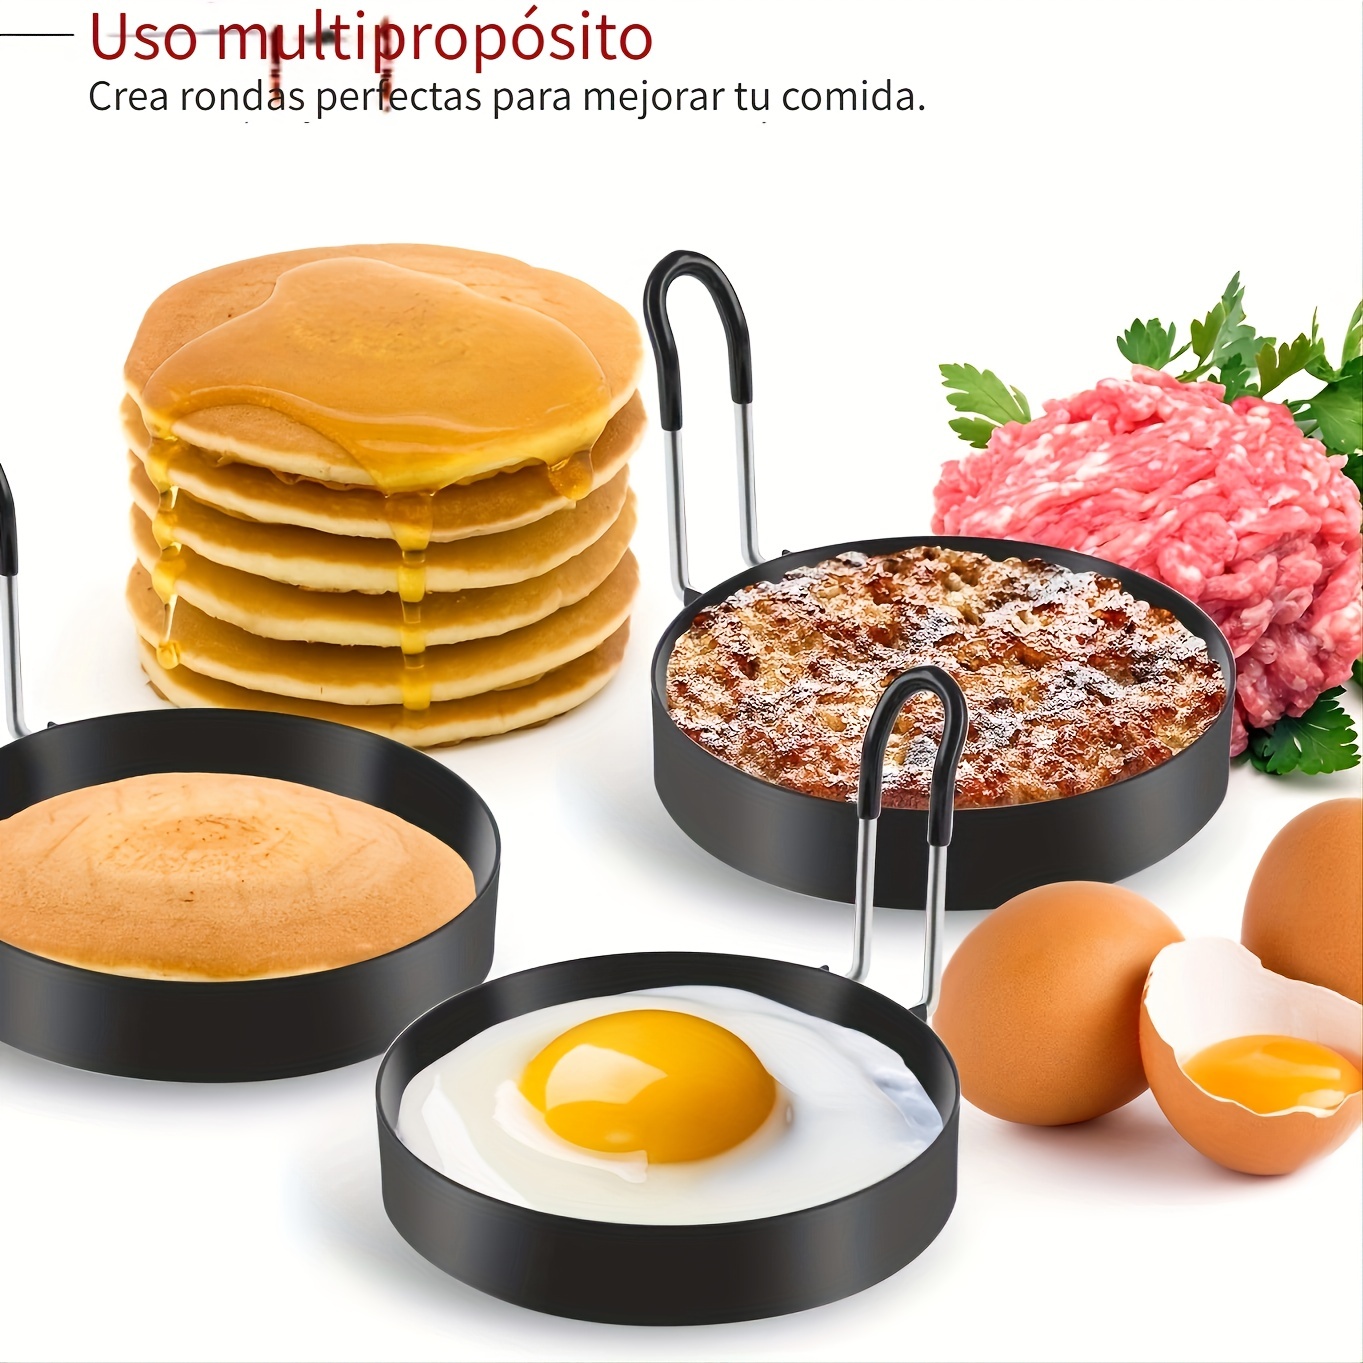 Maquina Para Hacer Panqueques Pancakes Hotcakes Huevos Galletas